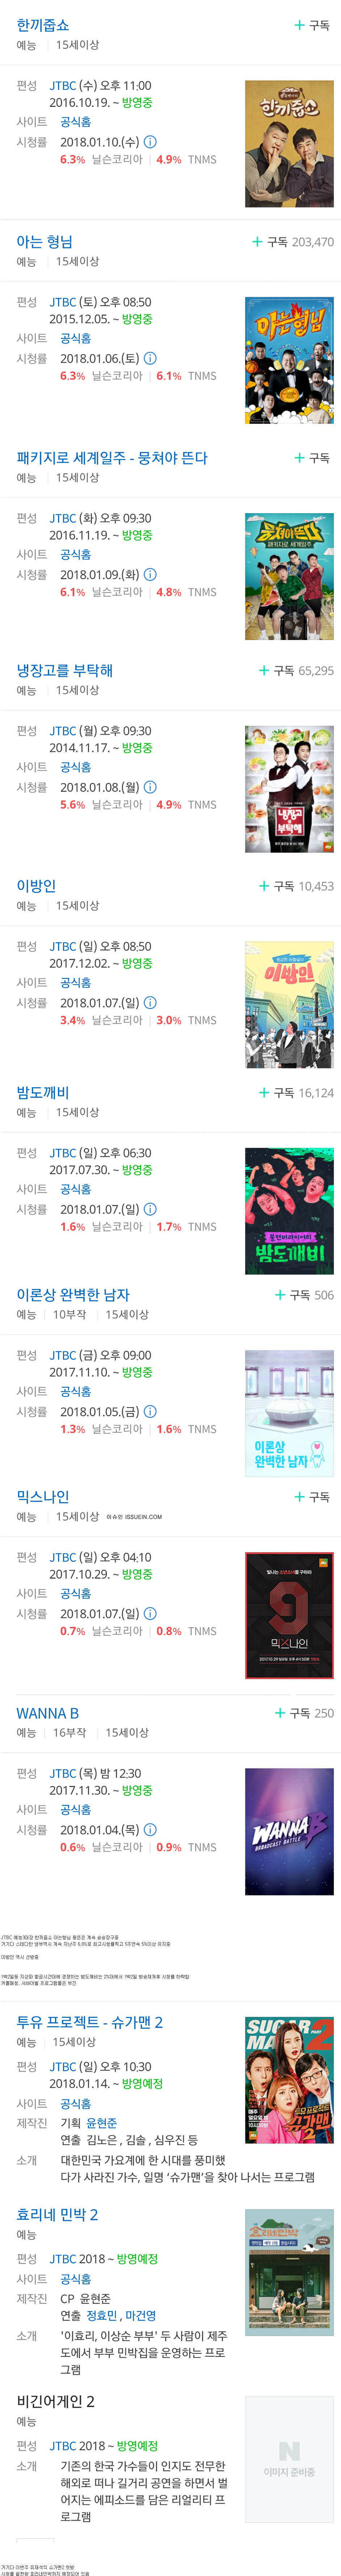 JTBC 모든 예능 시청률